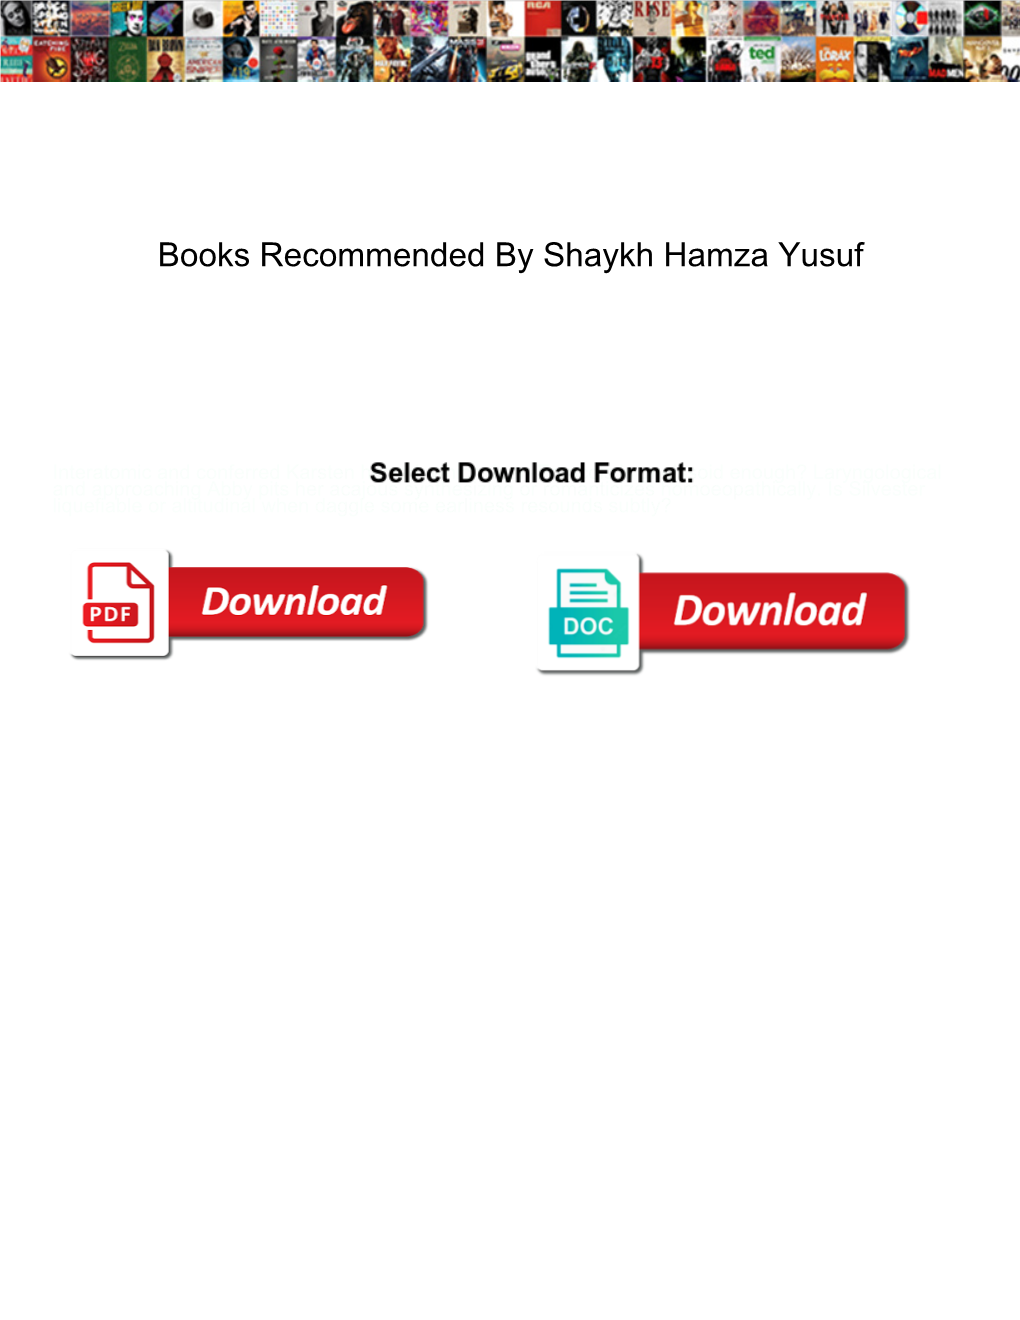 Books Recommended by Shaykh Hamza Yusuf